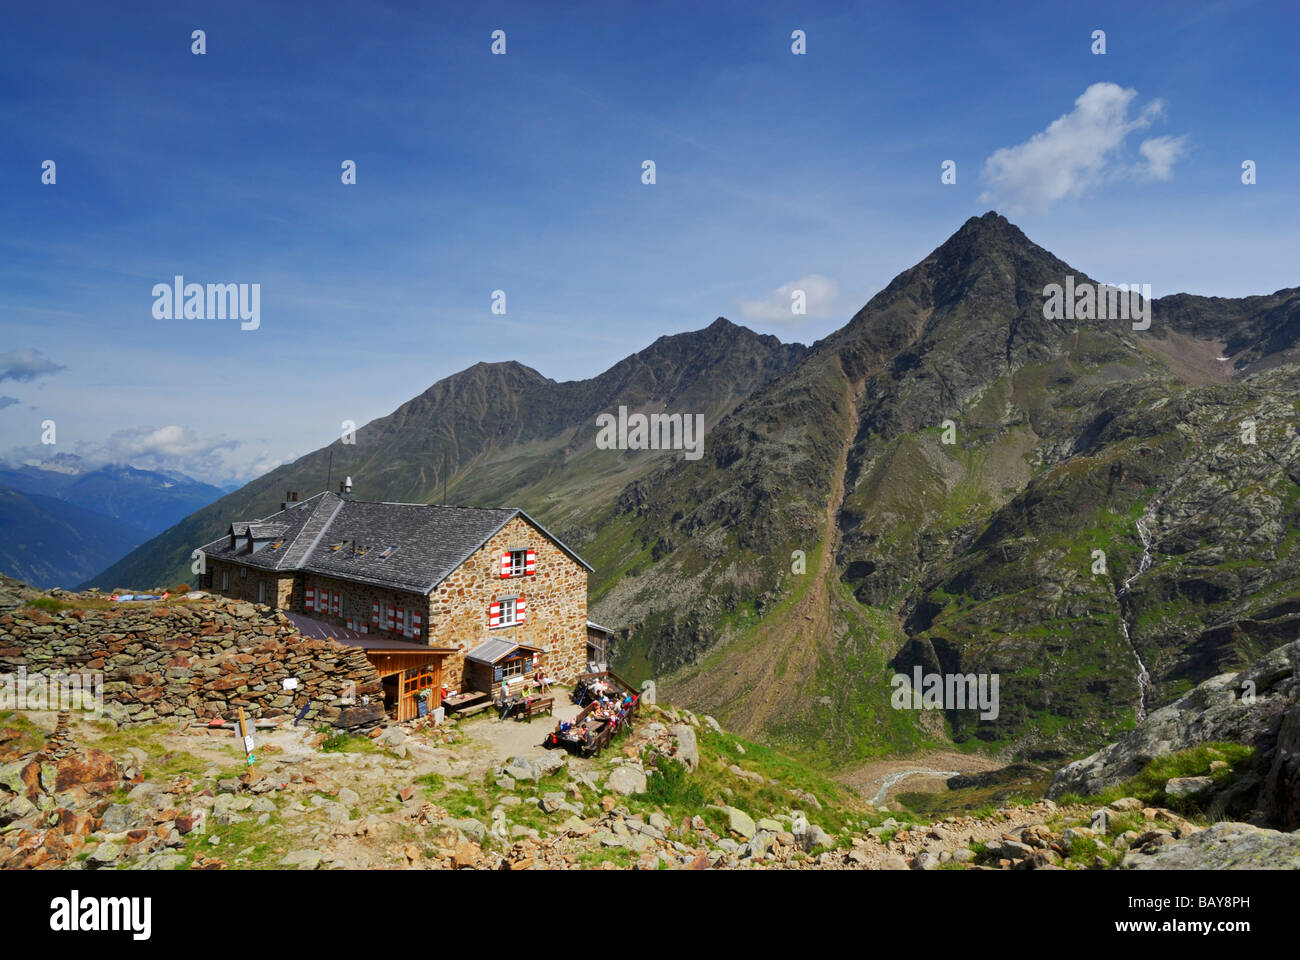 hikers in front of hut Nuernberger Huette, Stubaier Alpen range, Stubai, Tyrol, Austria Stock Photo